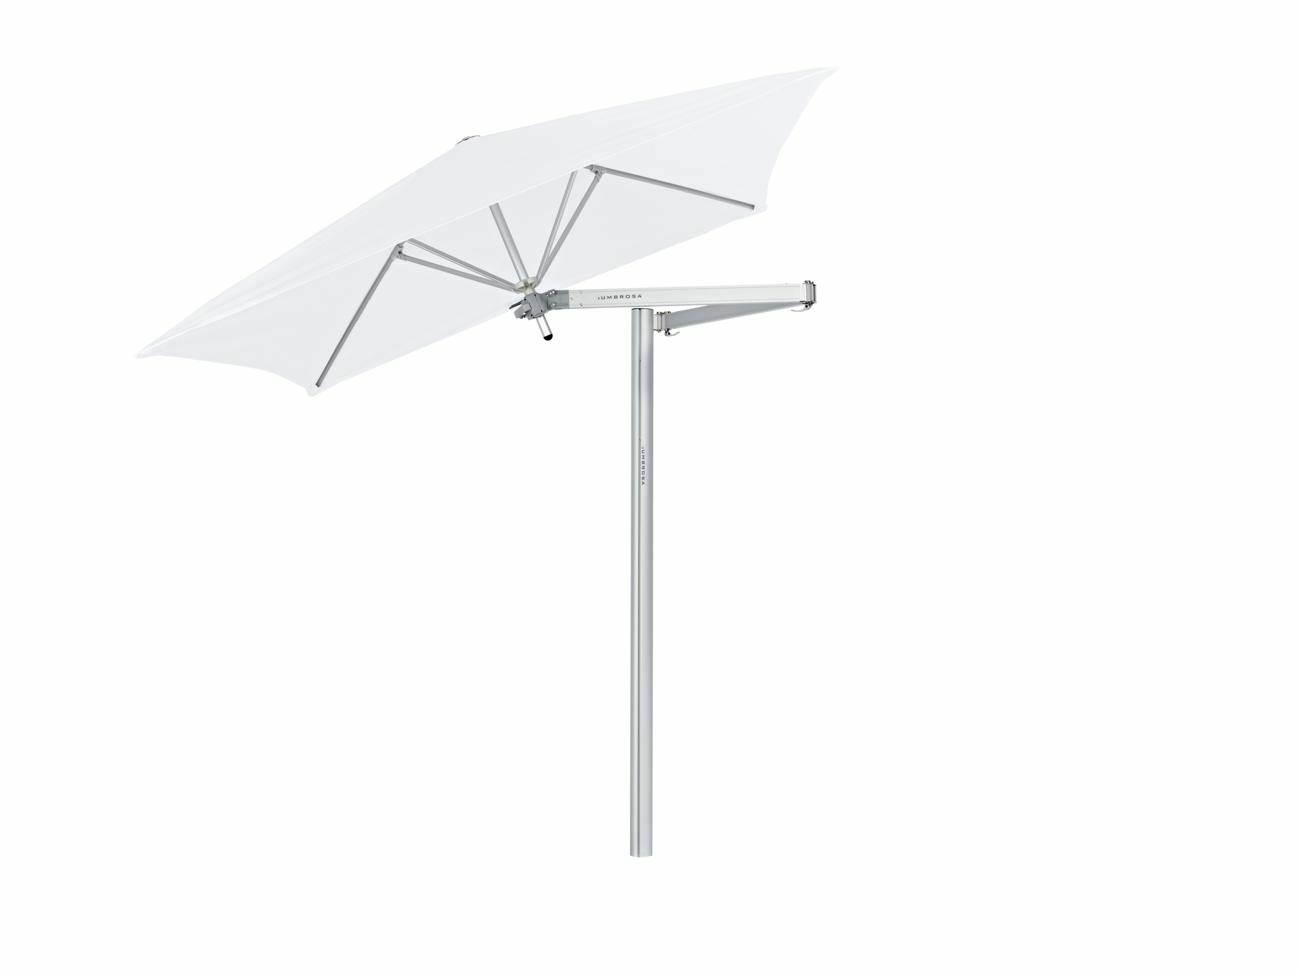 Paraflex cantilever umbrella square 1,9 m with Natural fabric and a Classic arm